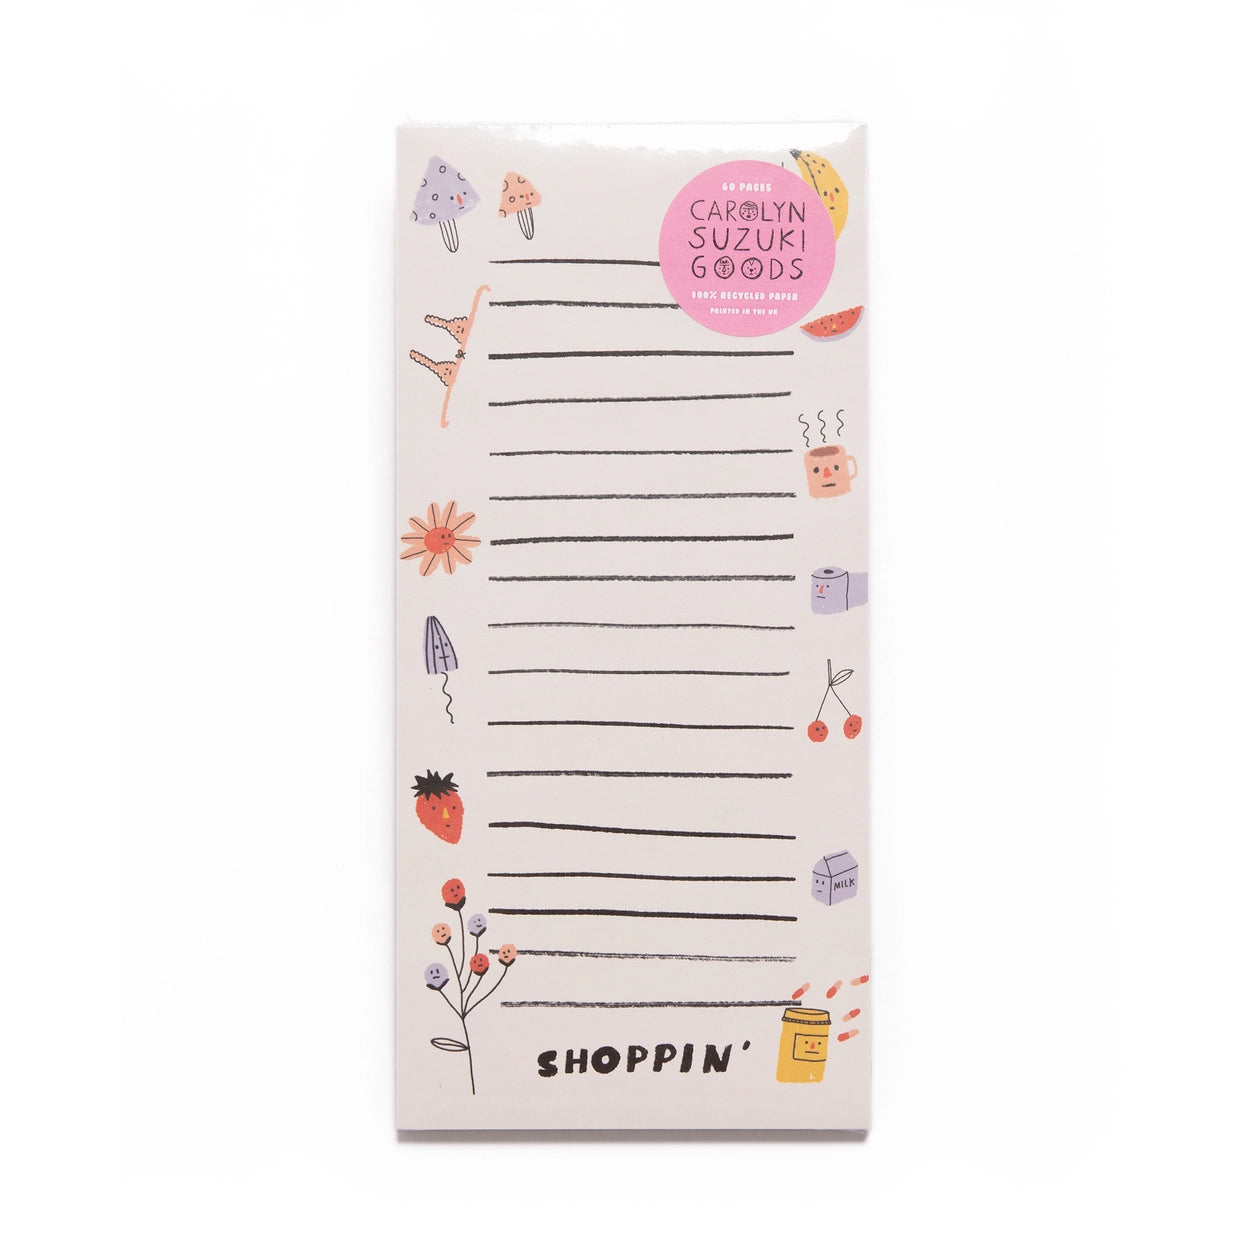 Shoppin' - Market Note Pad - Proper